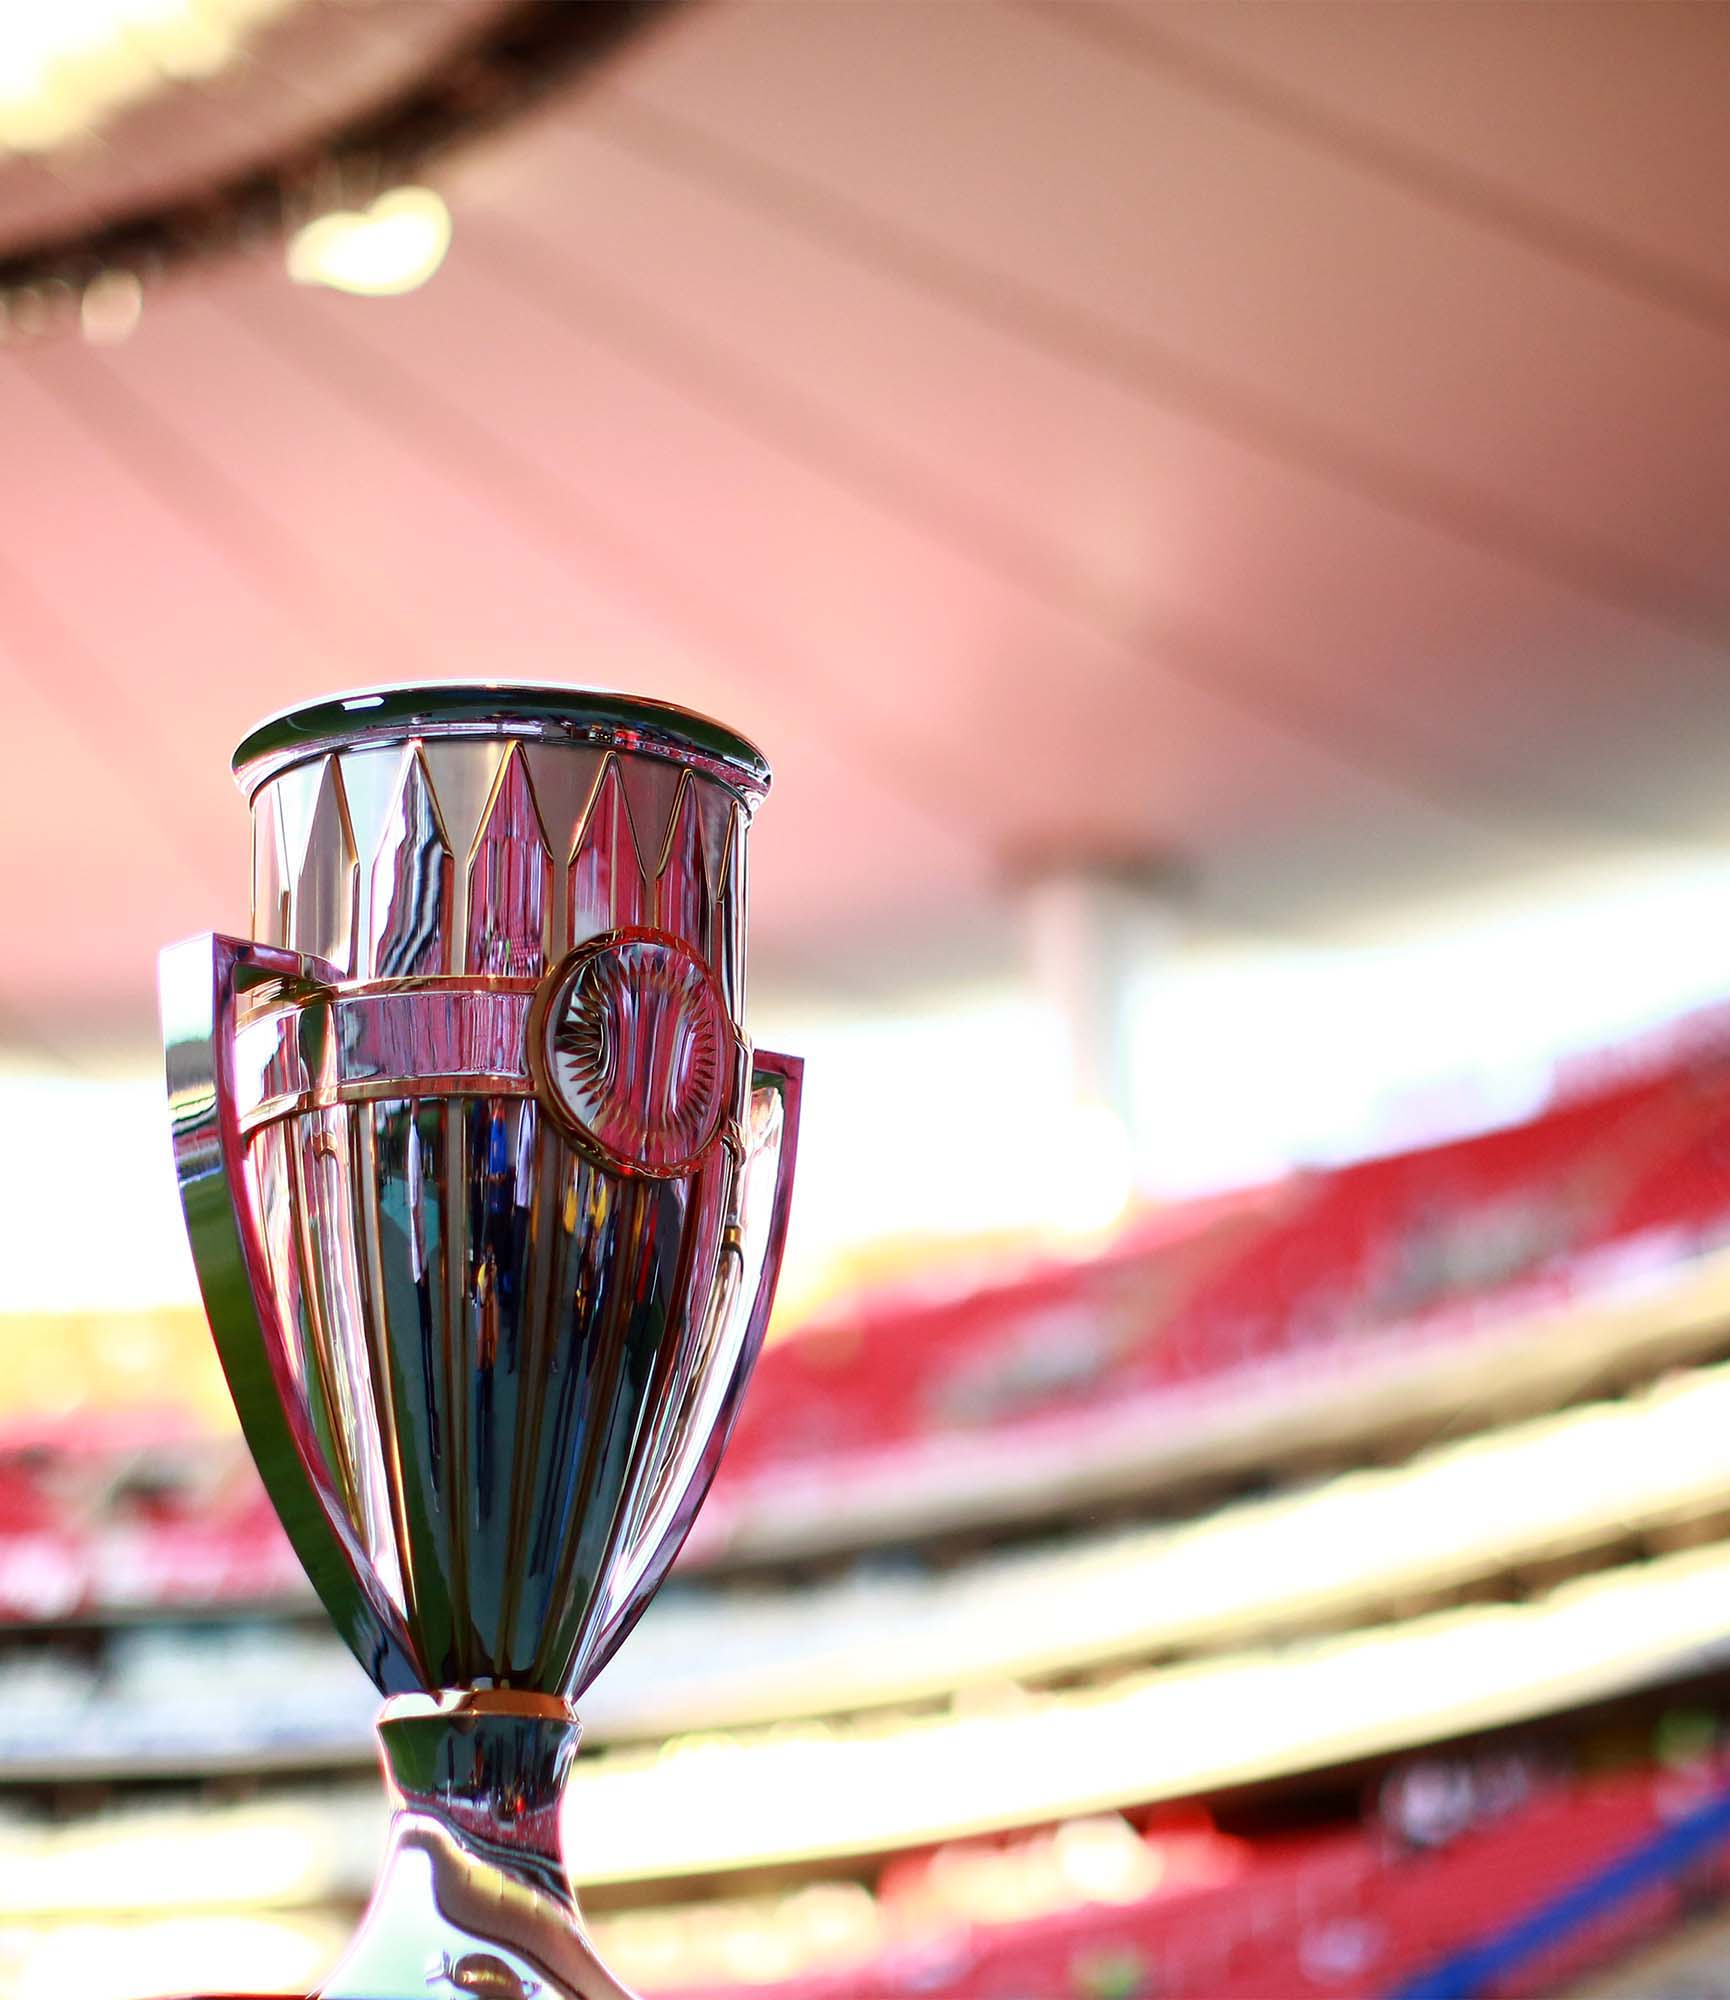 https://thomaslyte.com/wp-content/uploads/2022/02/CONCACAF-champions-league-trophy-portrait.jpg